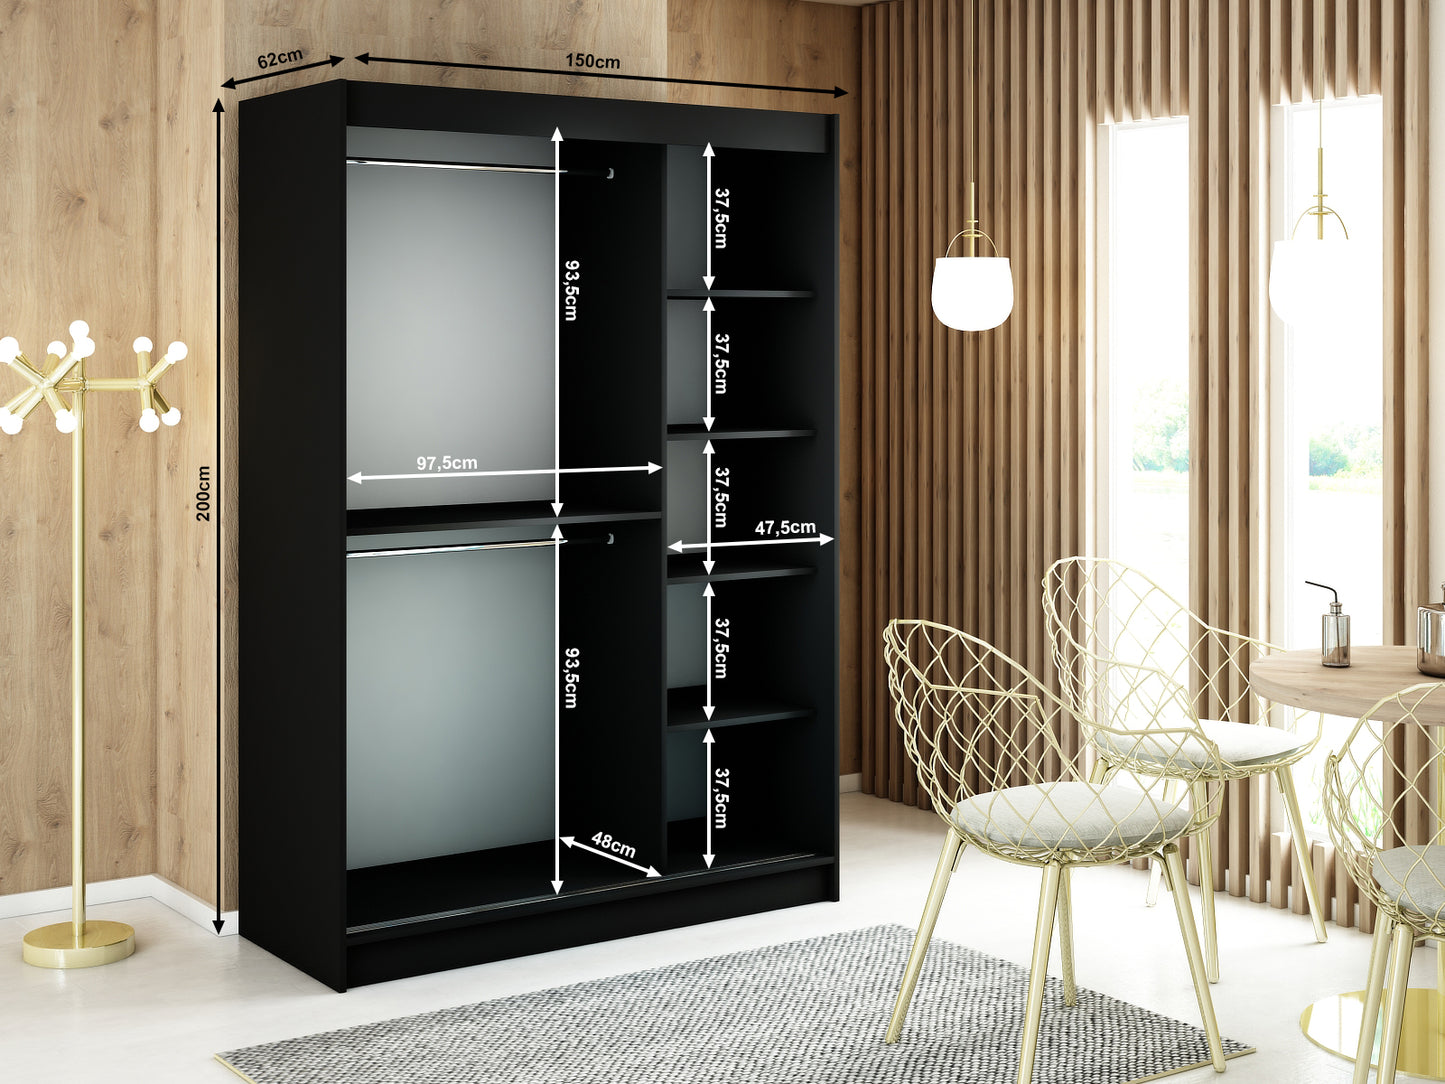 MALI V2 - Sliding Wardrobe Black with Mirror Gold Details Shelves Rails Drawers Optional >150cm<